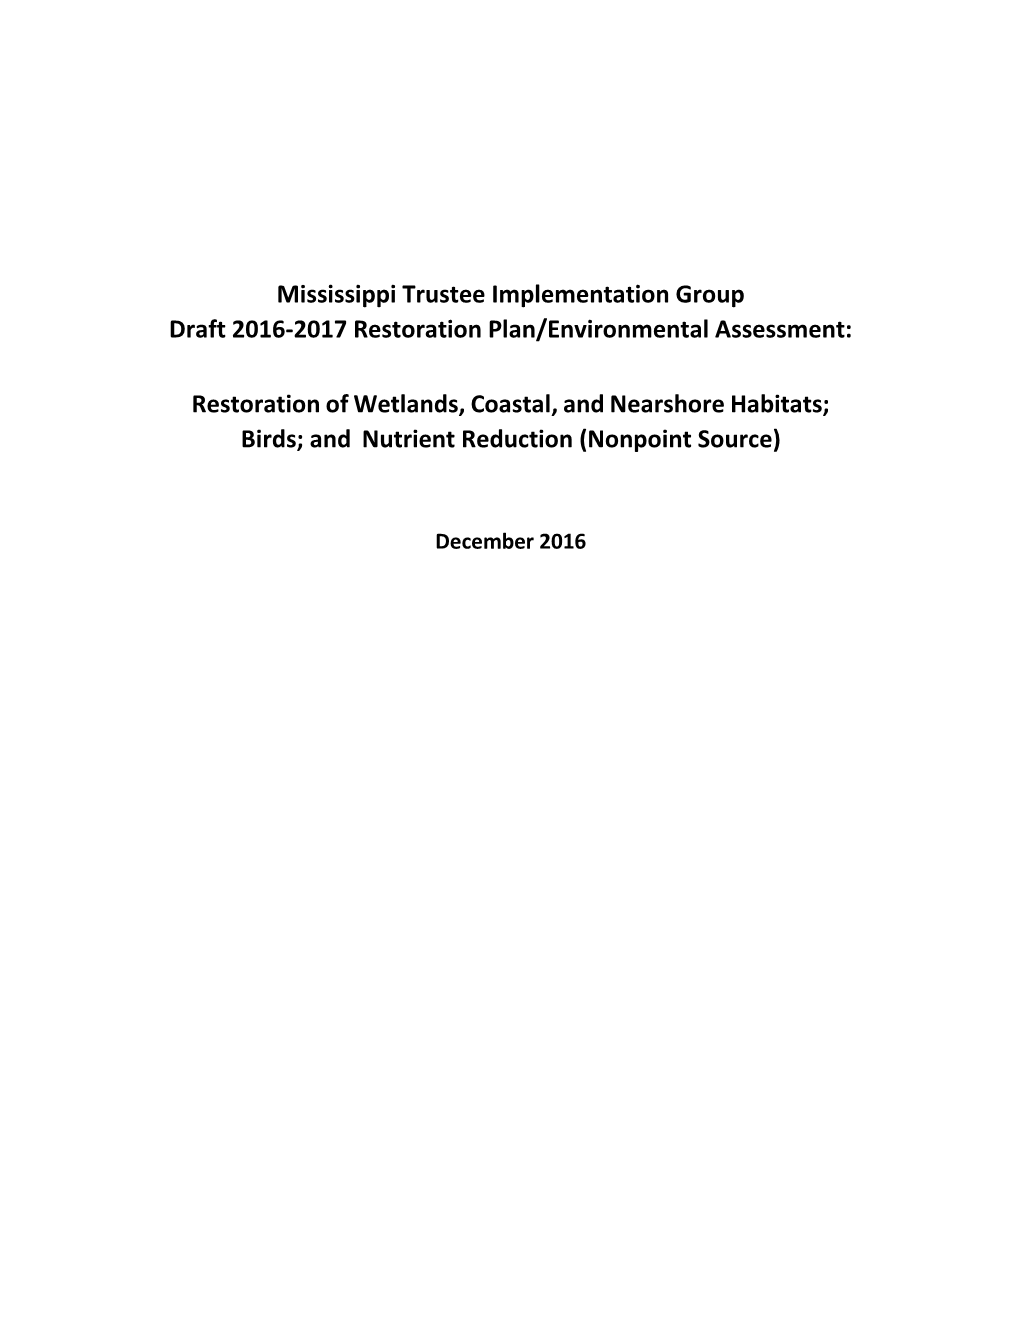 MS TIG Draft 2016-2017 Restoration Plan/Environmental Assessment